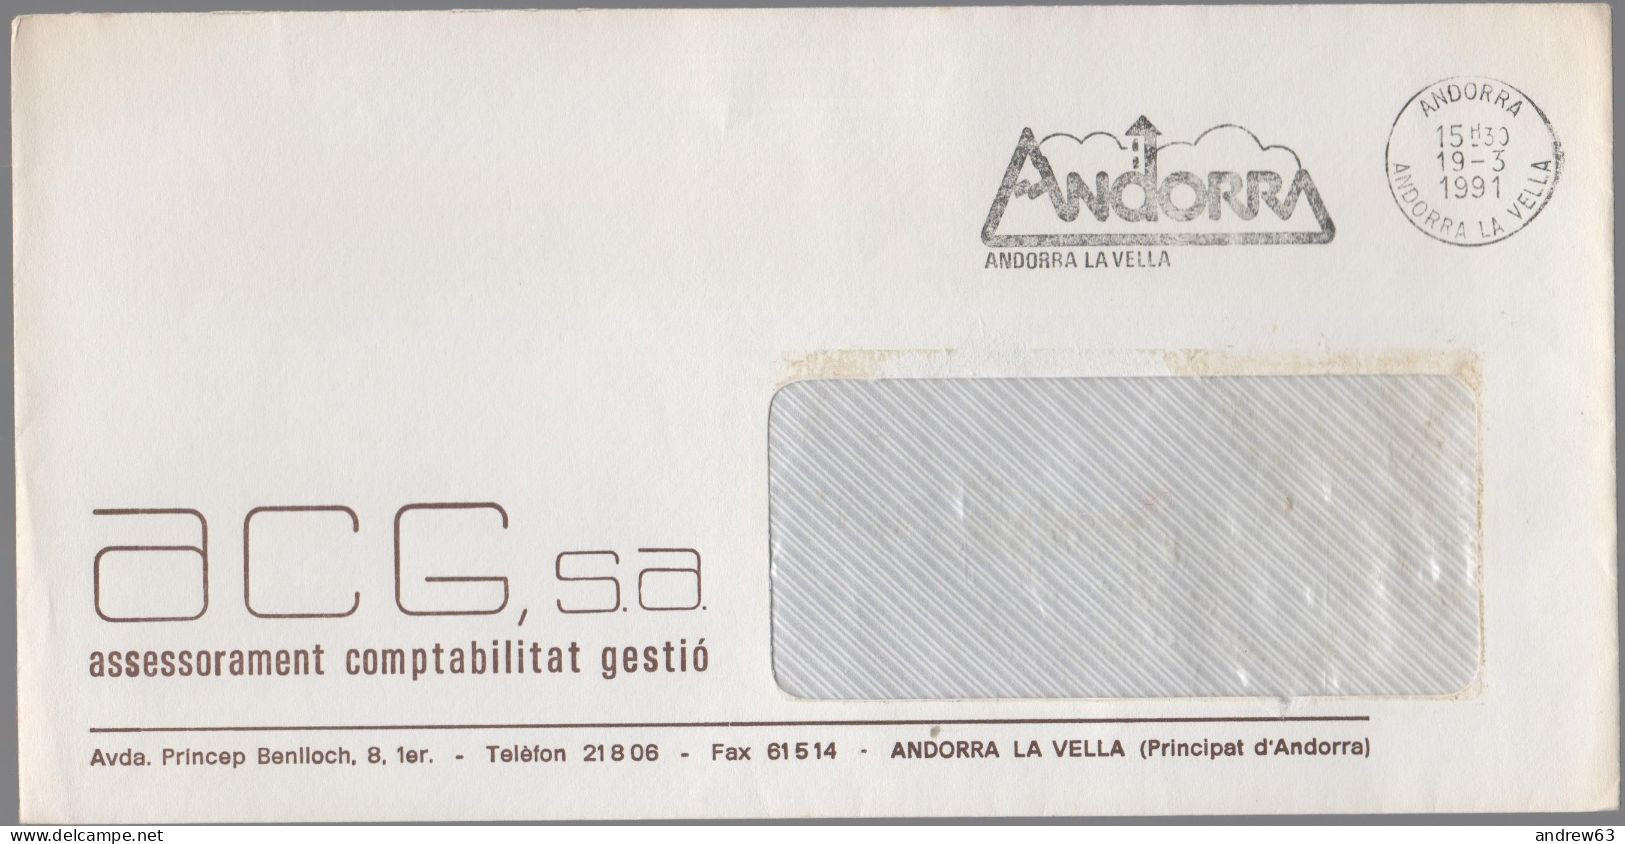 ANDORRA - ANDORRE - 1991 - Lettre En Franchise + Flamme - ACG, S.a. - Viaggiata Da Andorra La Vella - Covers & Documents